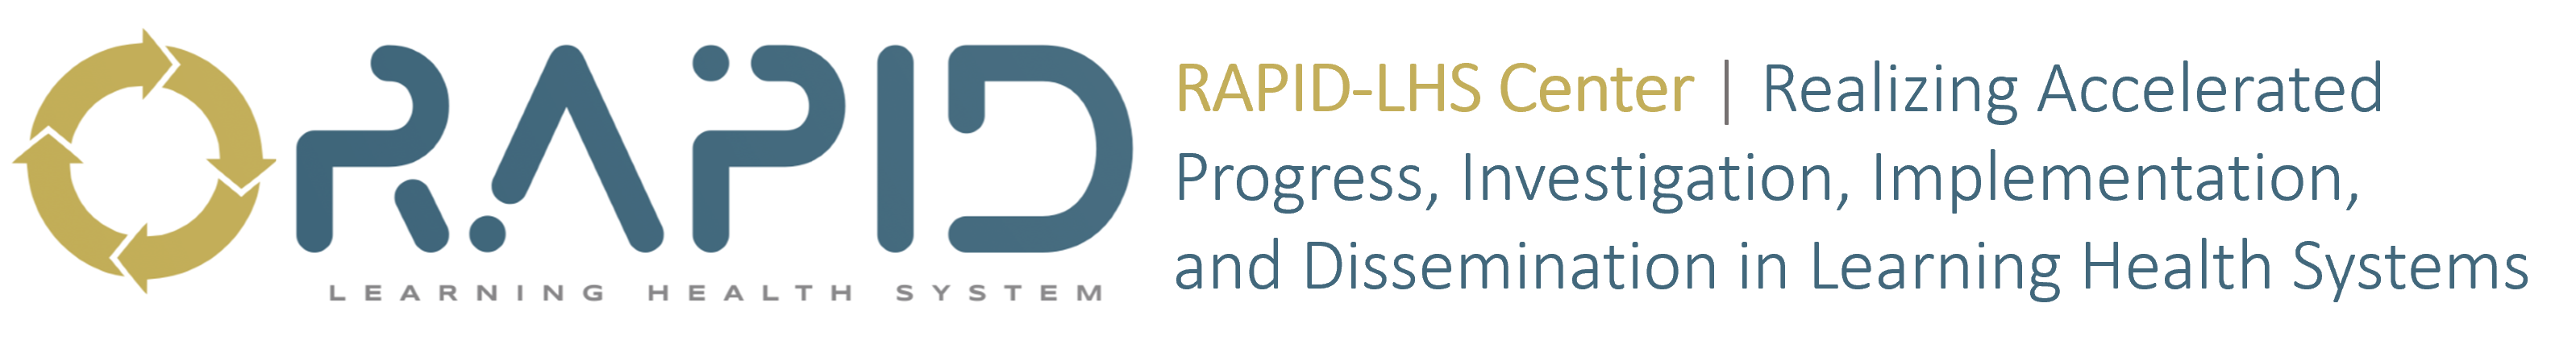 RAPID-LHS logo